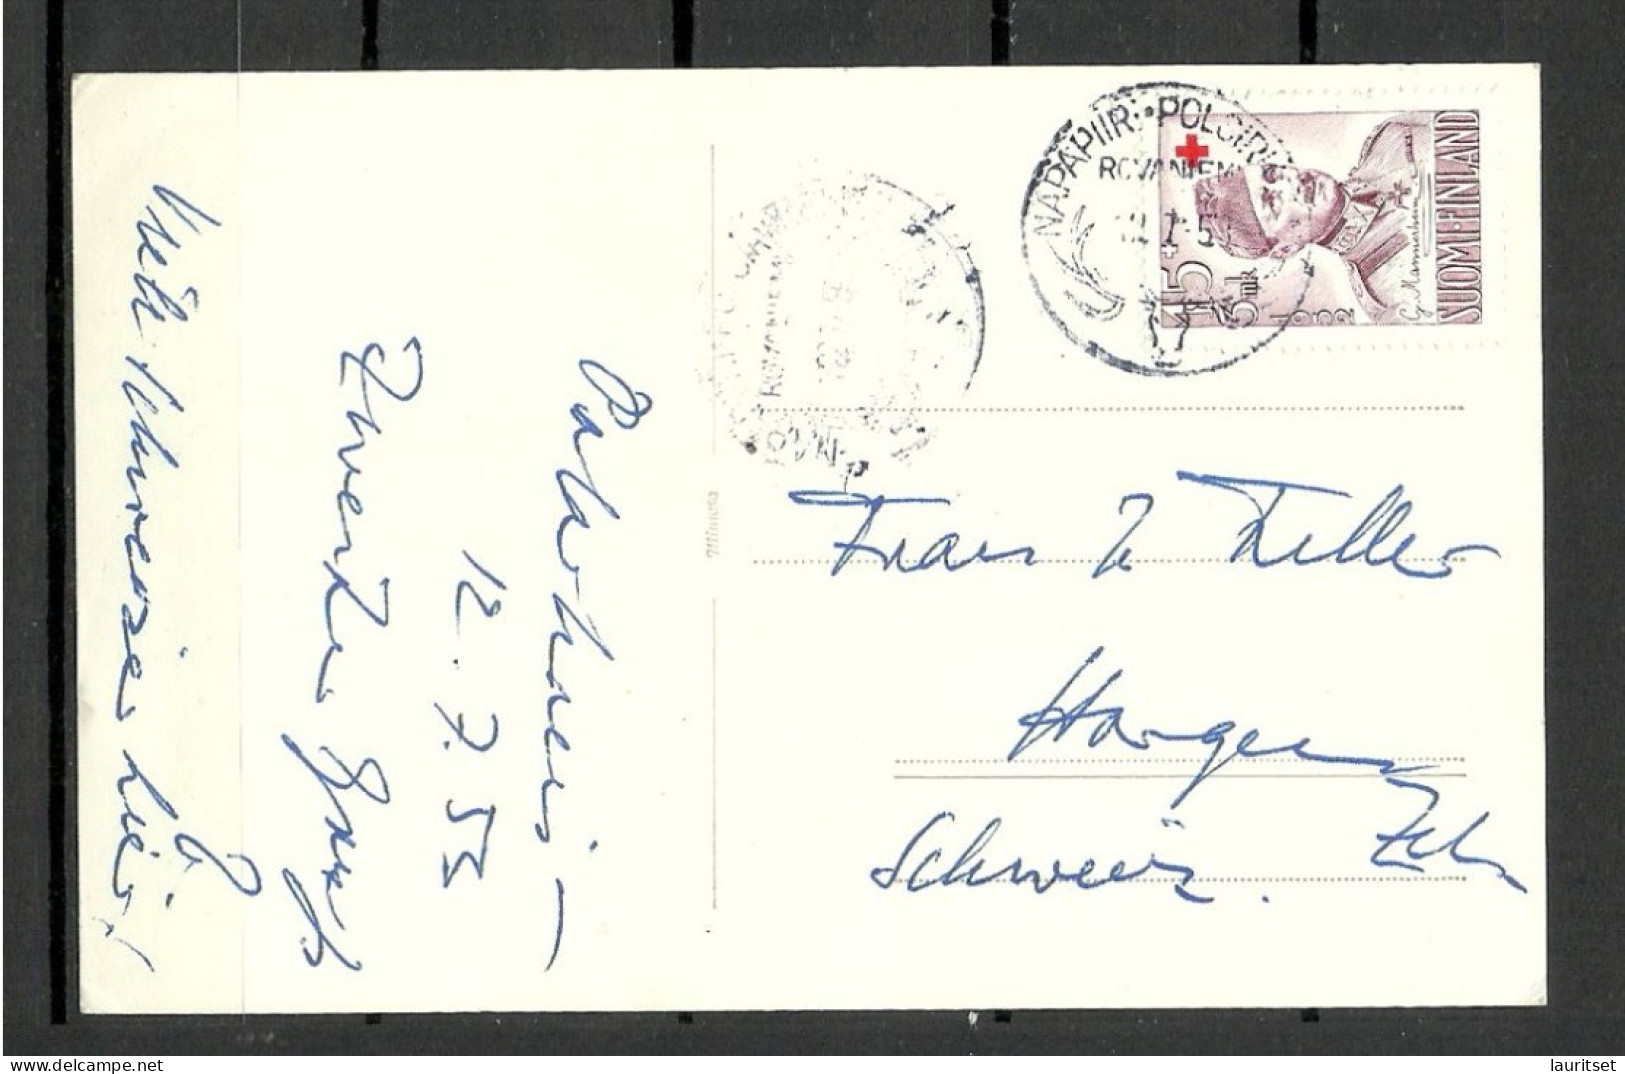 FINNLAND Finland 1953 O Napapiiri Polar Circle Rovaniemi Post Card Sent To Switzerland Michel 408 As Single - Storia Postale